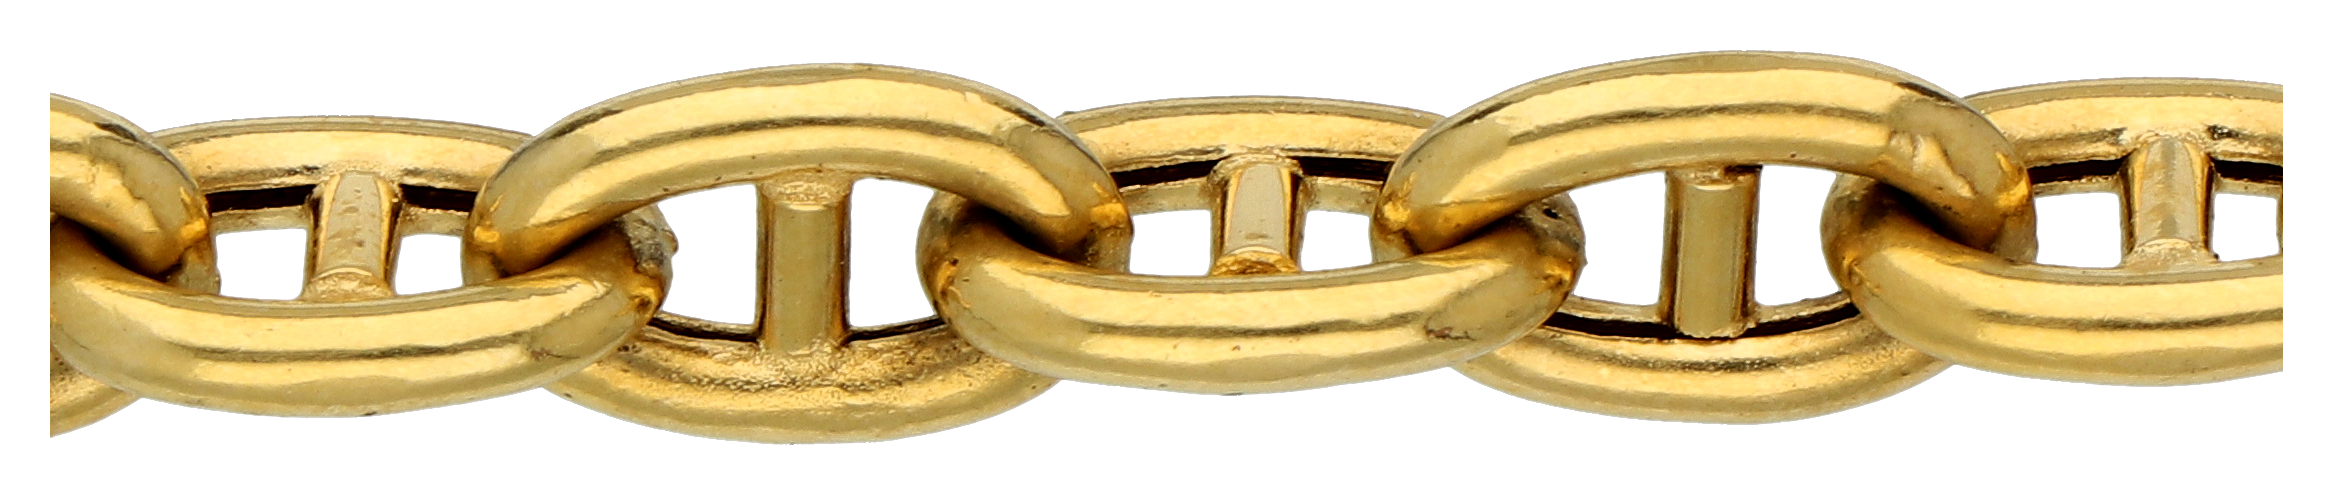 No Reserve - 18K Yellow Gold Urbano Italian Gucci link bracelet - Image 2 of 4